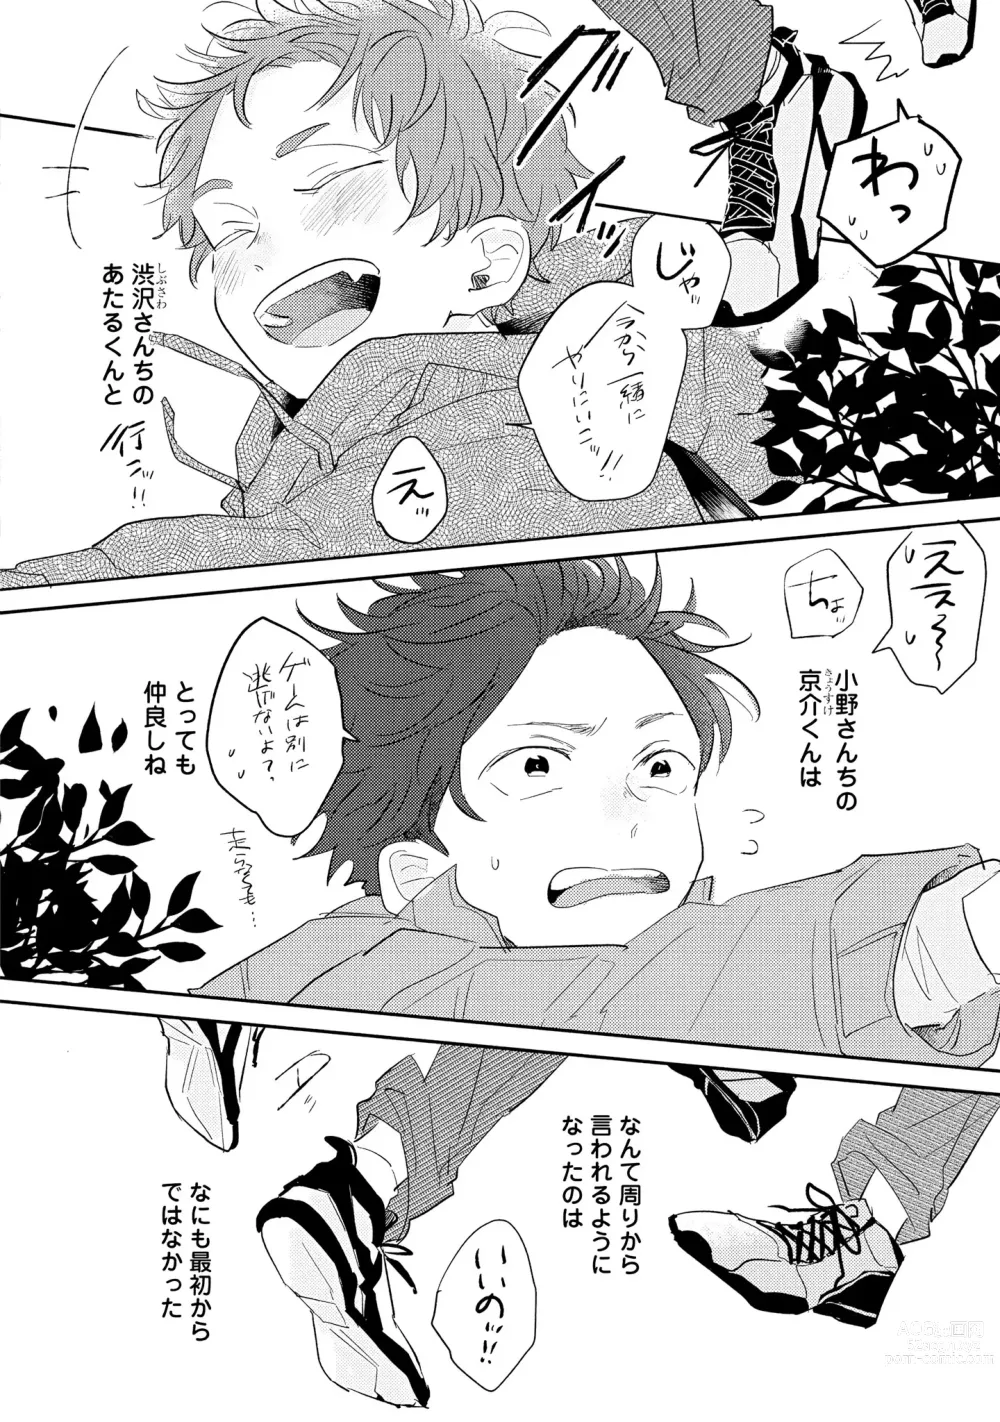 Page 8 of manga No Doubt Lilac